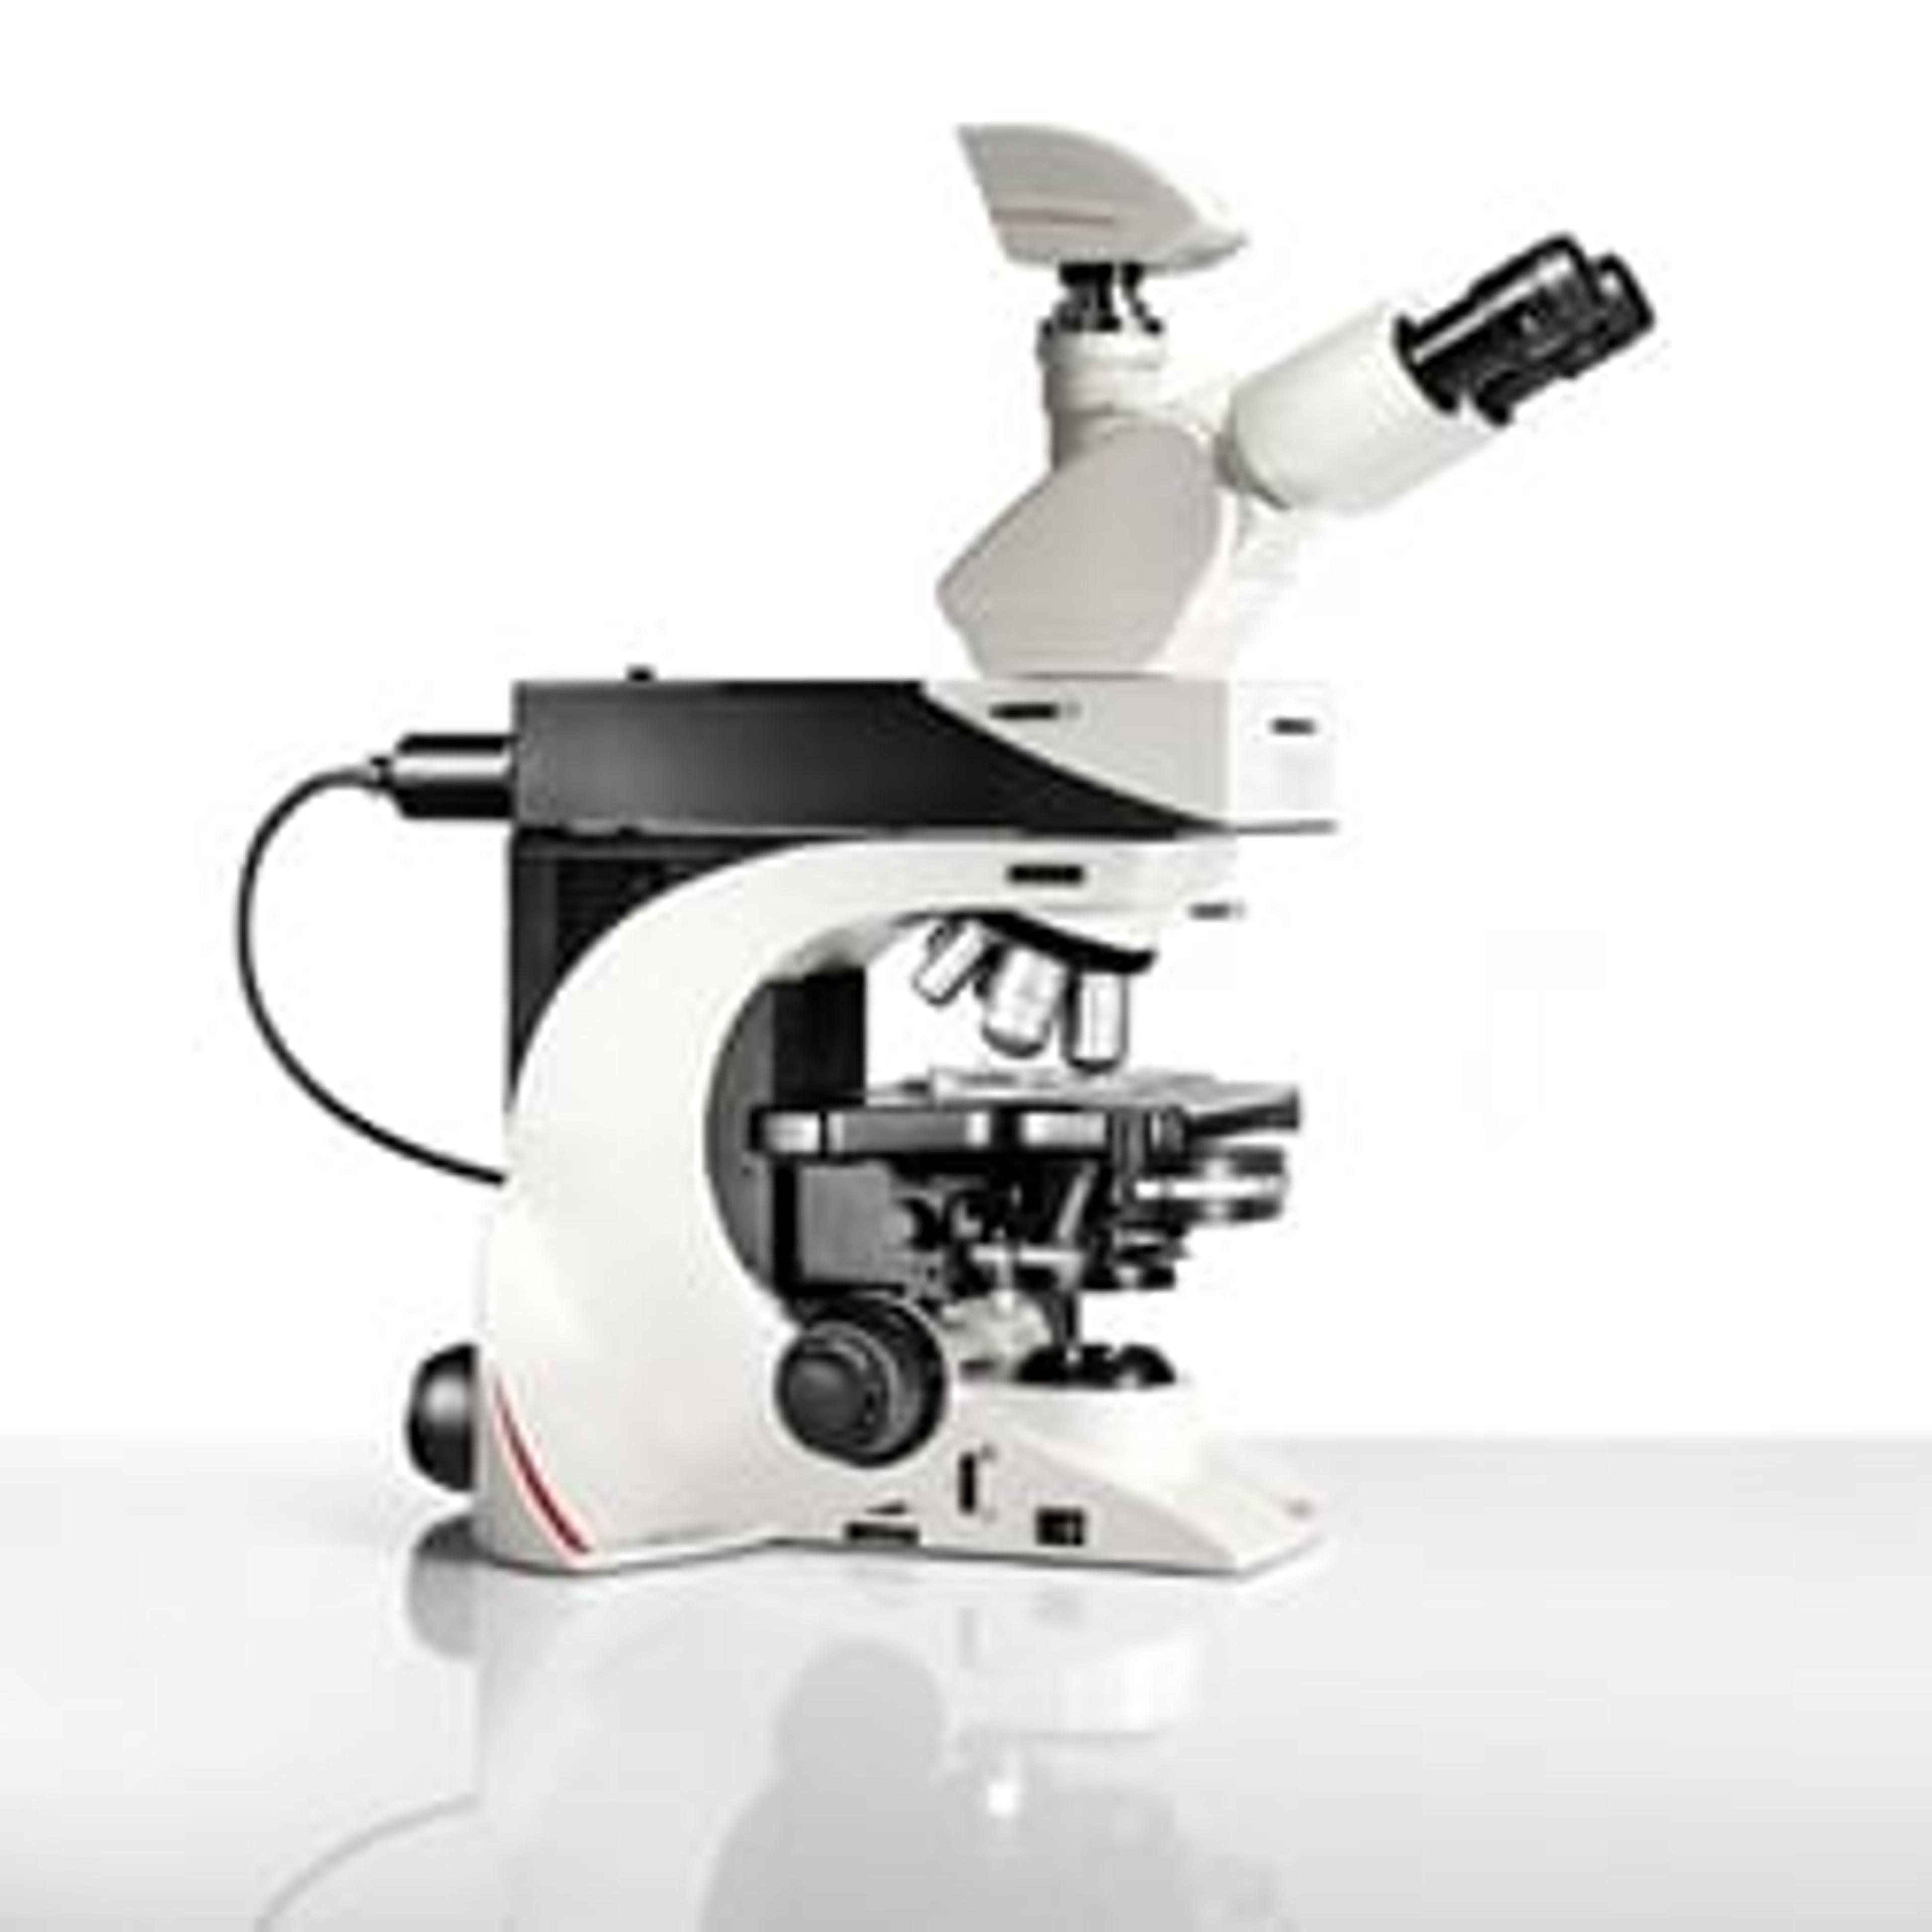 Leica DM2500 LED Optical microscope